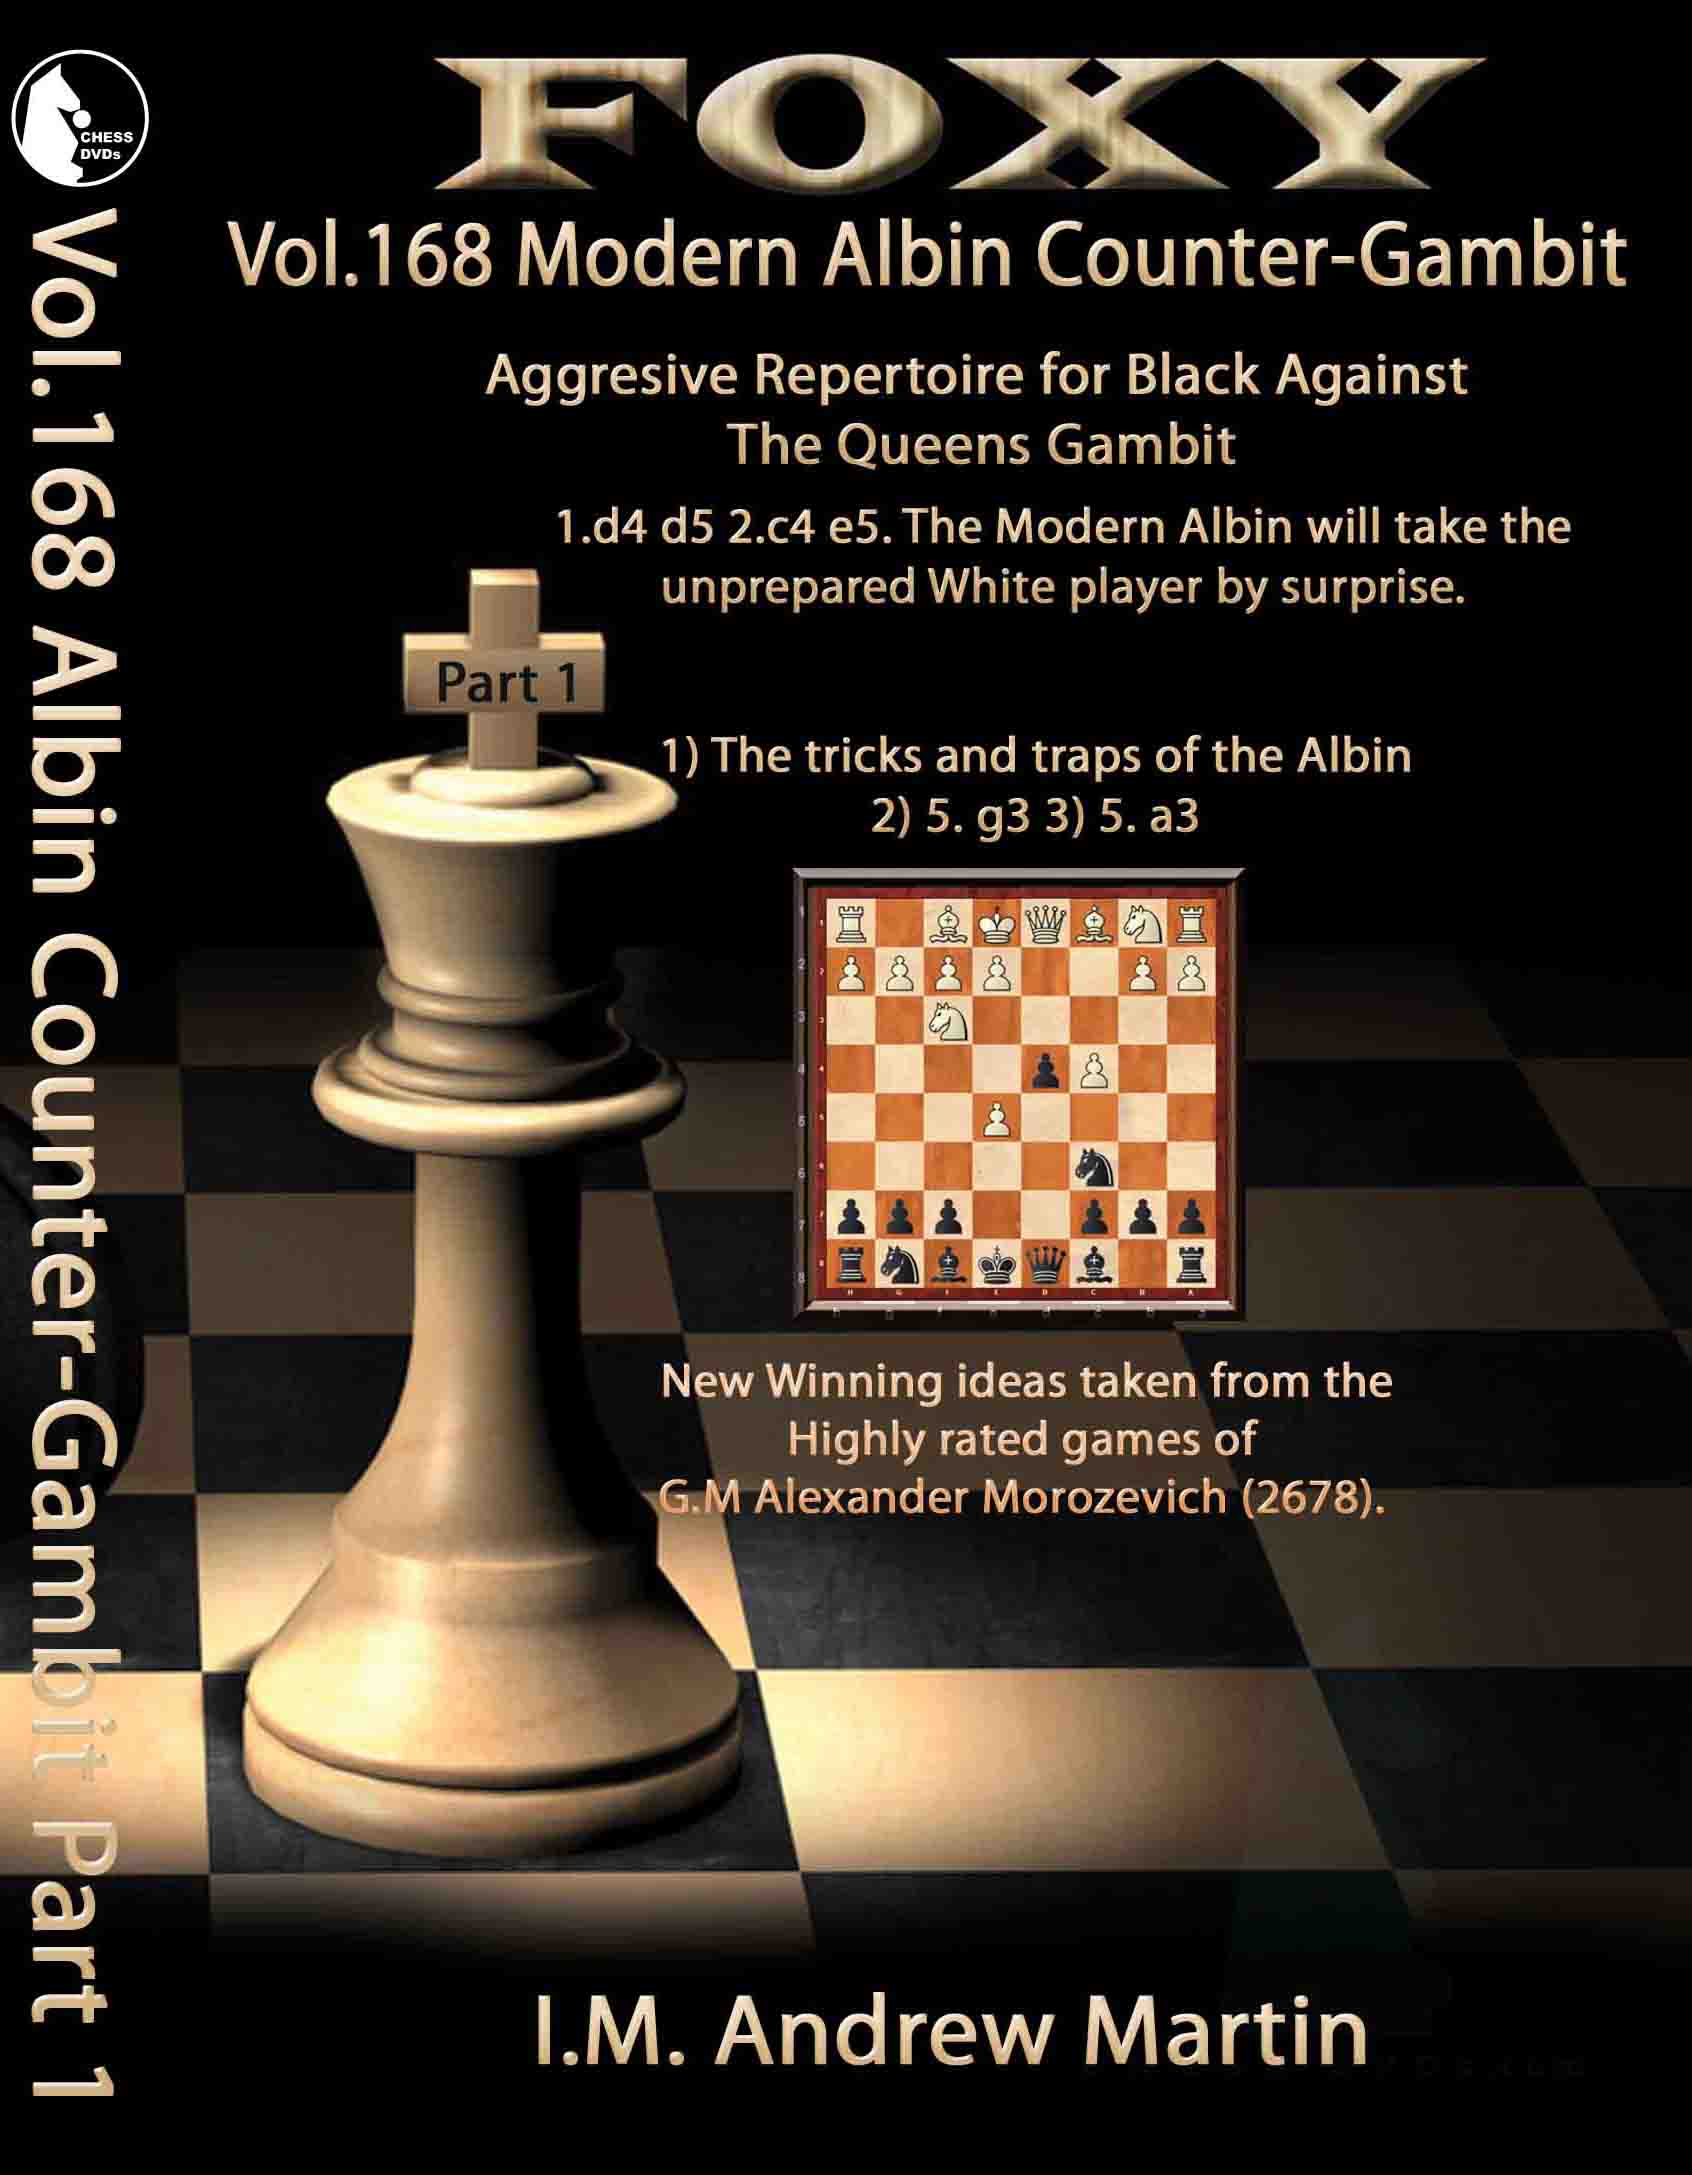 Best Chess Opening for Black Against 1.d4